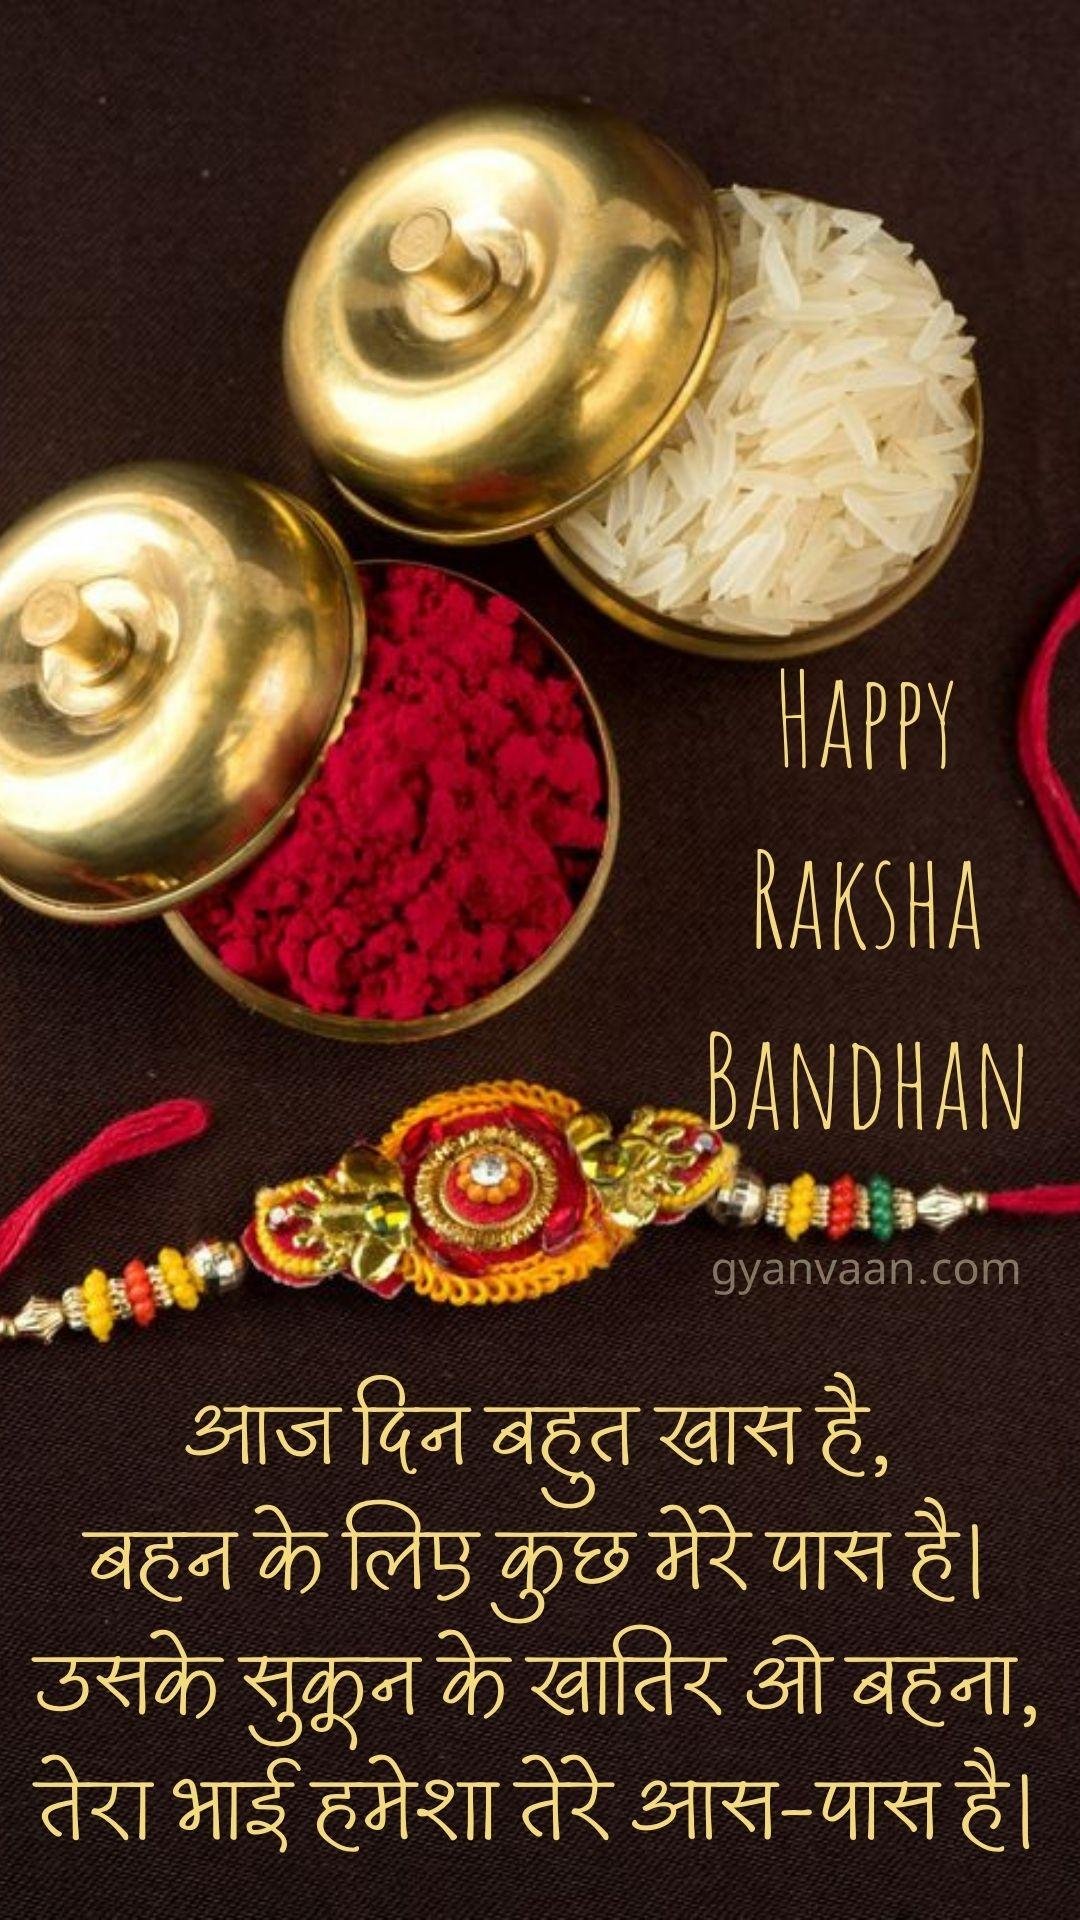 Raksha Bandhan Quotes Status Shayari And Wishes In Hindi For Mobile Devices 20 - Raksha Bandhan Quotes